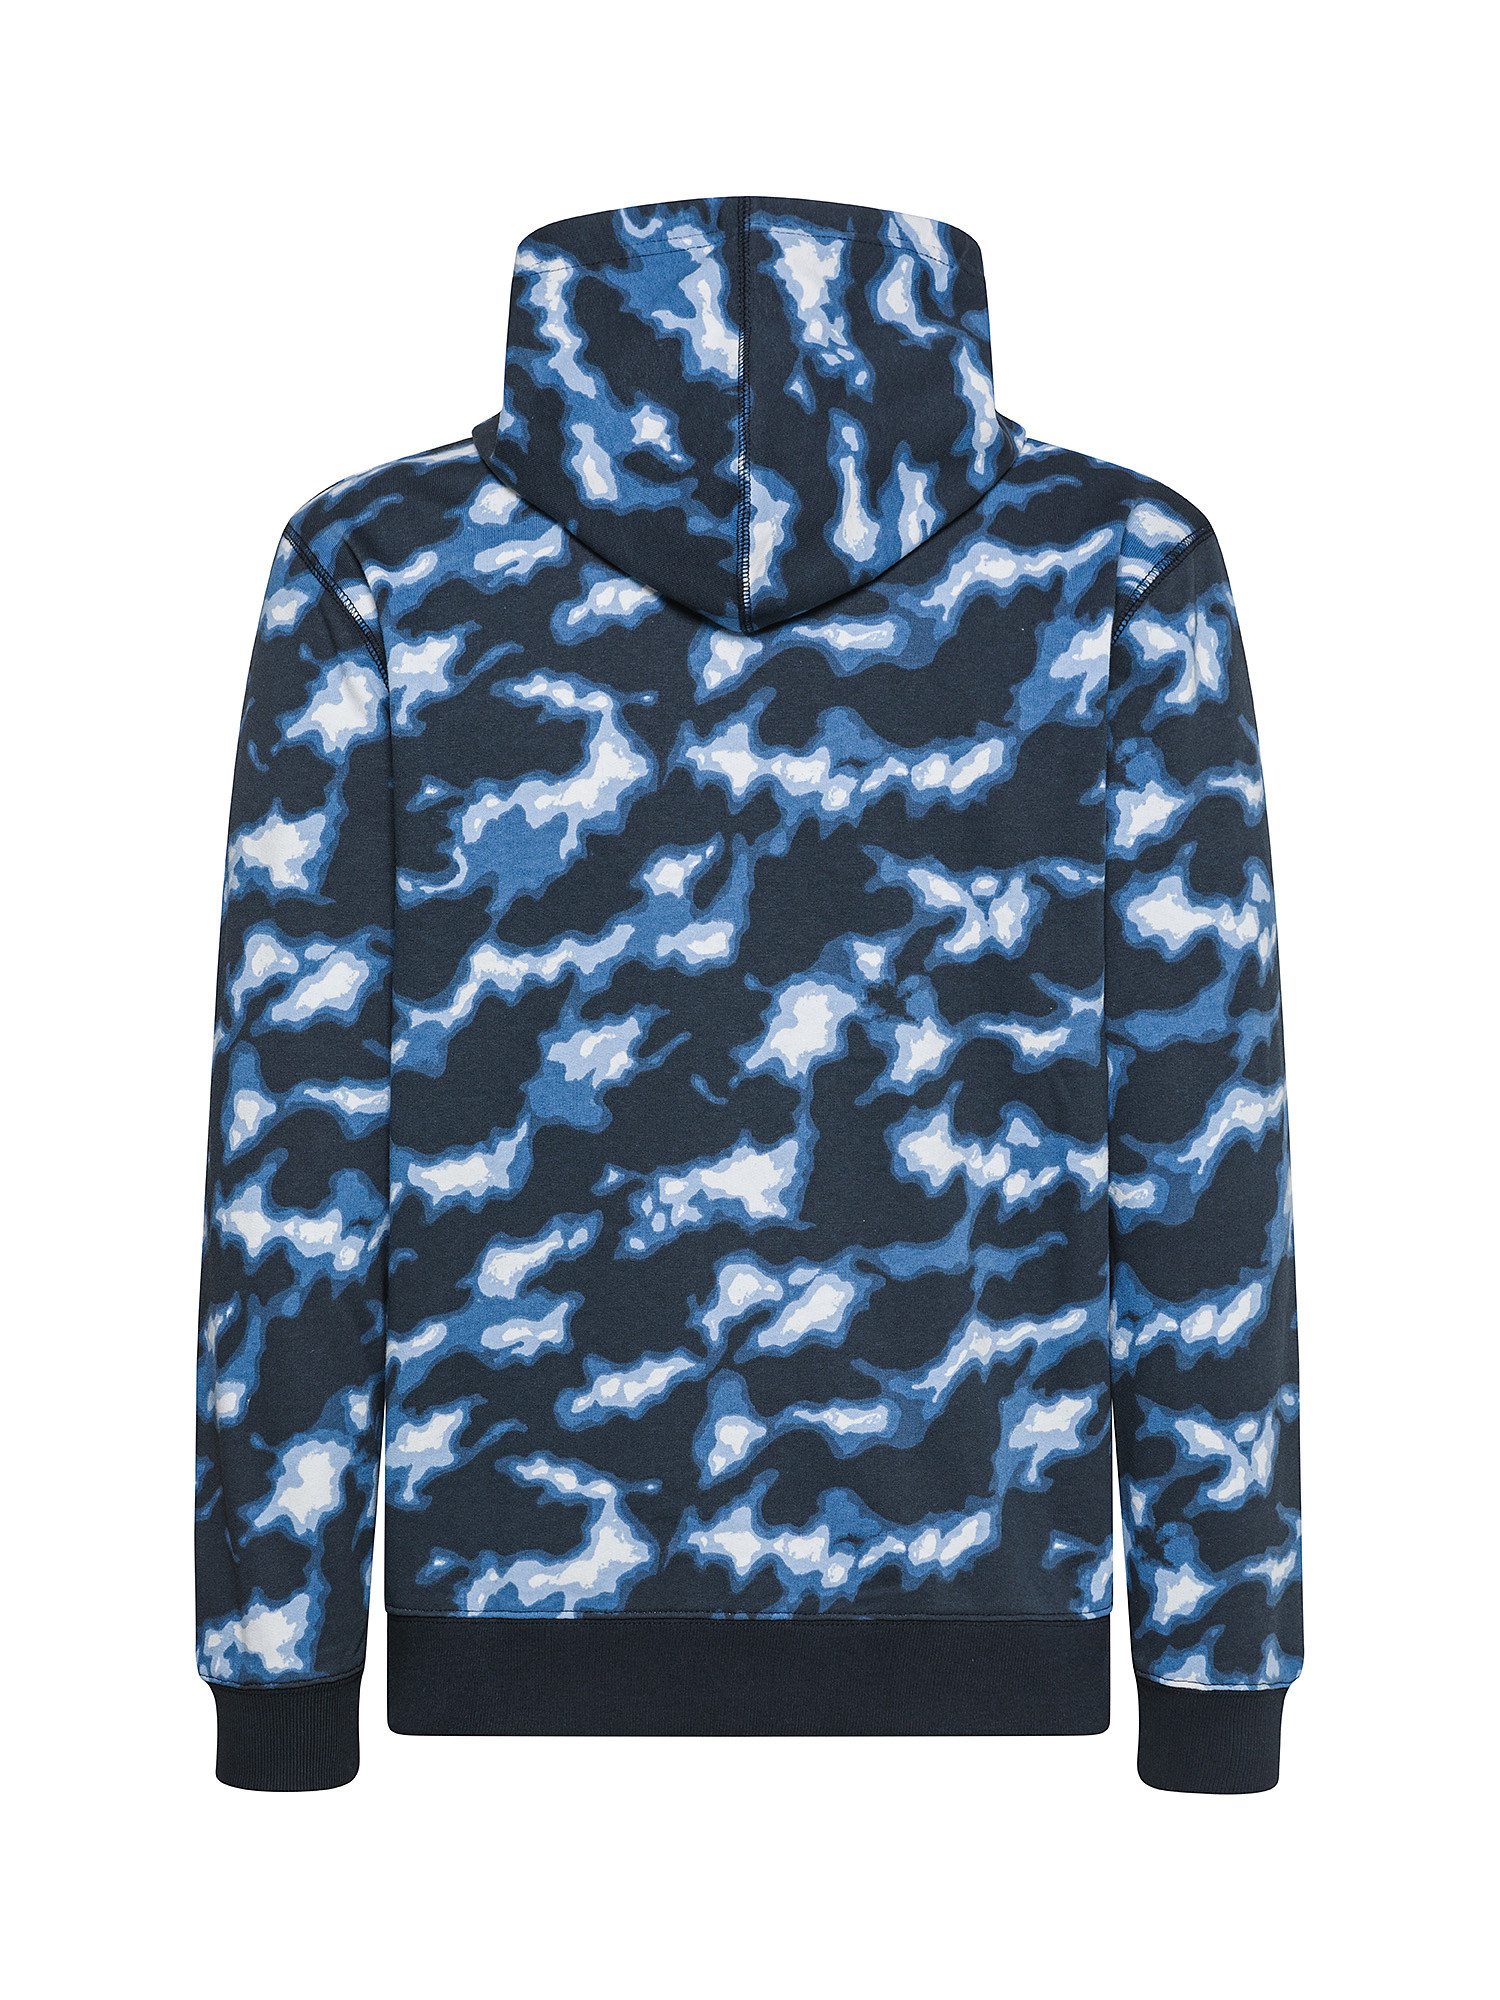 Pepe Jeans - Sweatshirt with camouflage print, Dark Blue, large image number 1